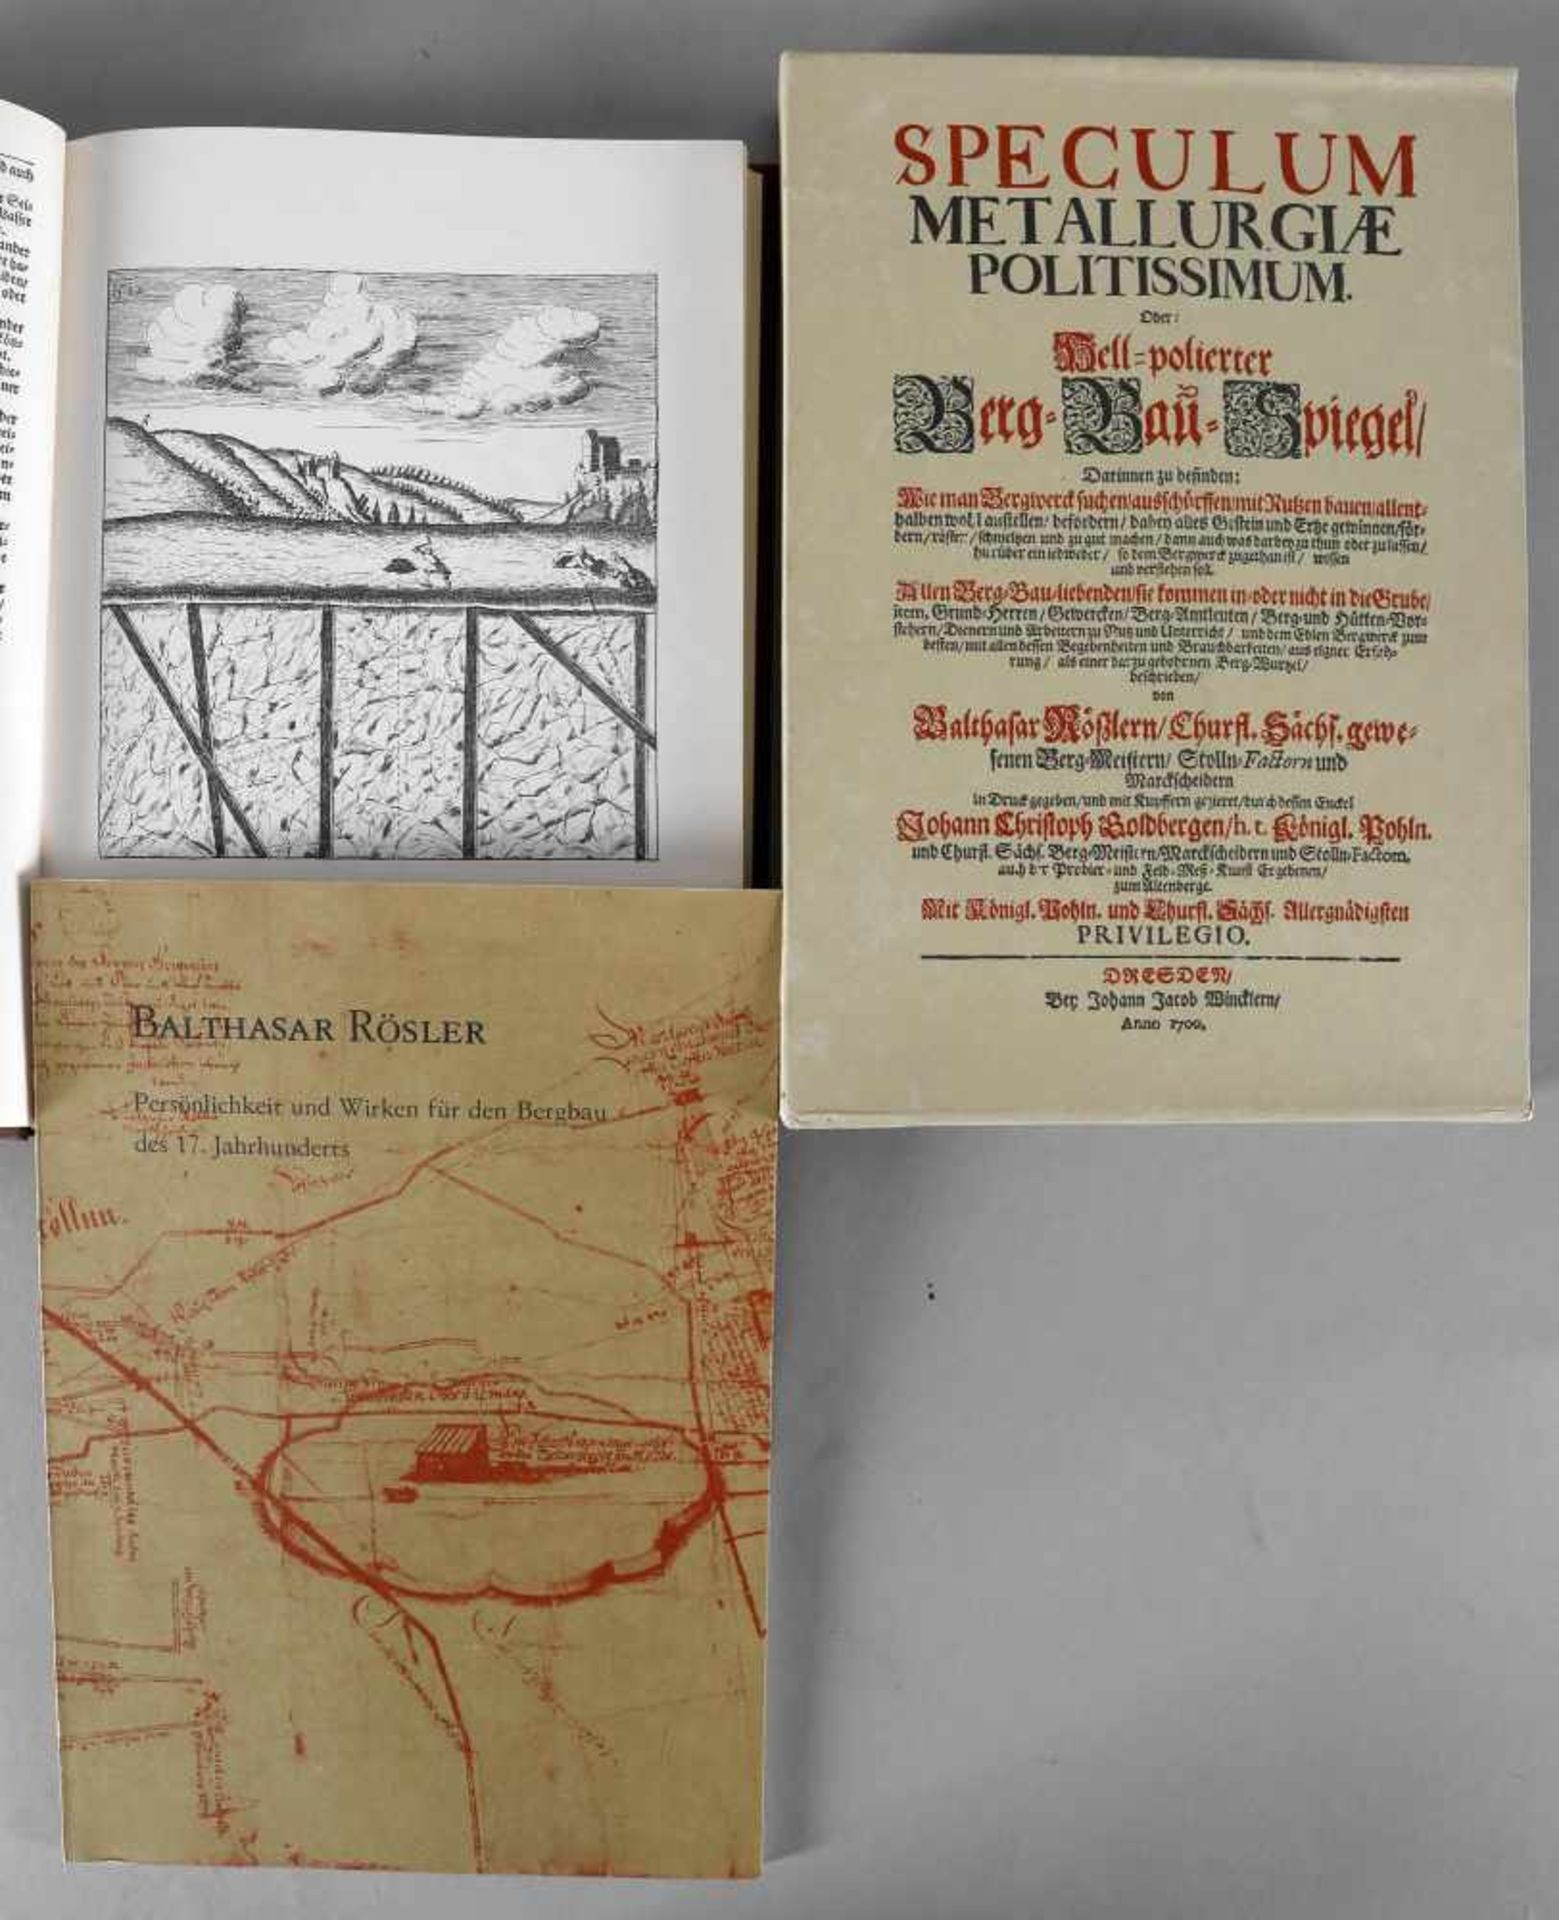 Faksimile-Ausgabe der Speculum Metallurgiae Politissimum von 1700 (Hell-polierter Berg-